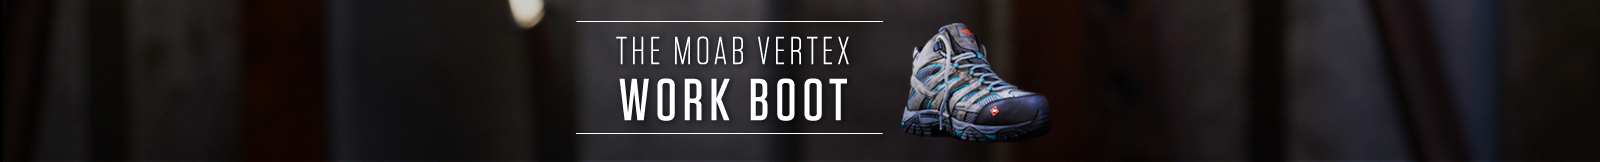 The Moab Vertex Work Boot